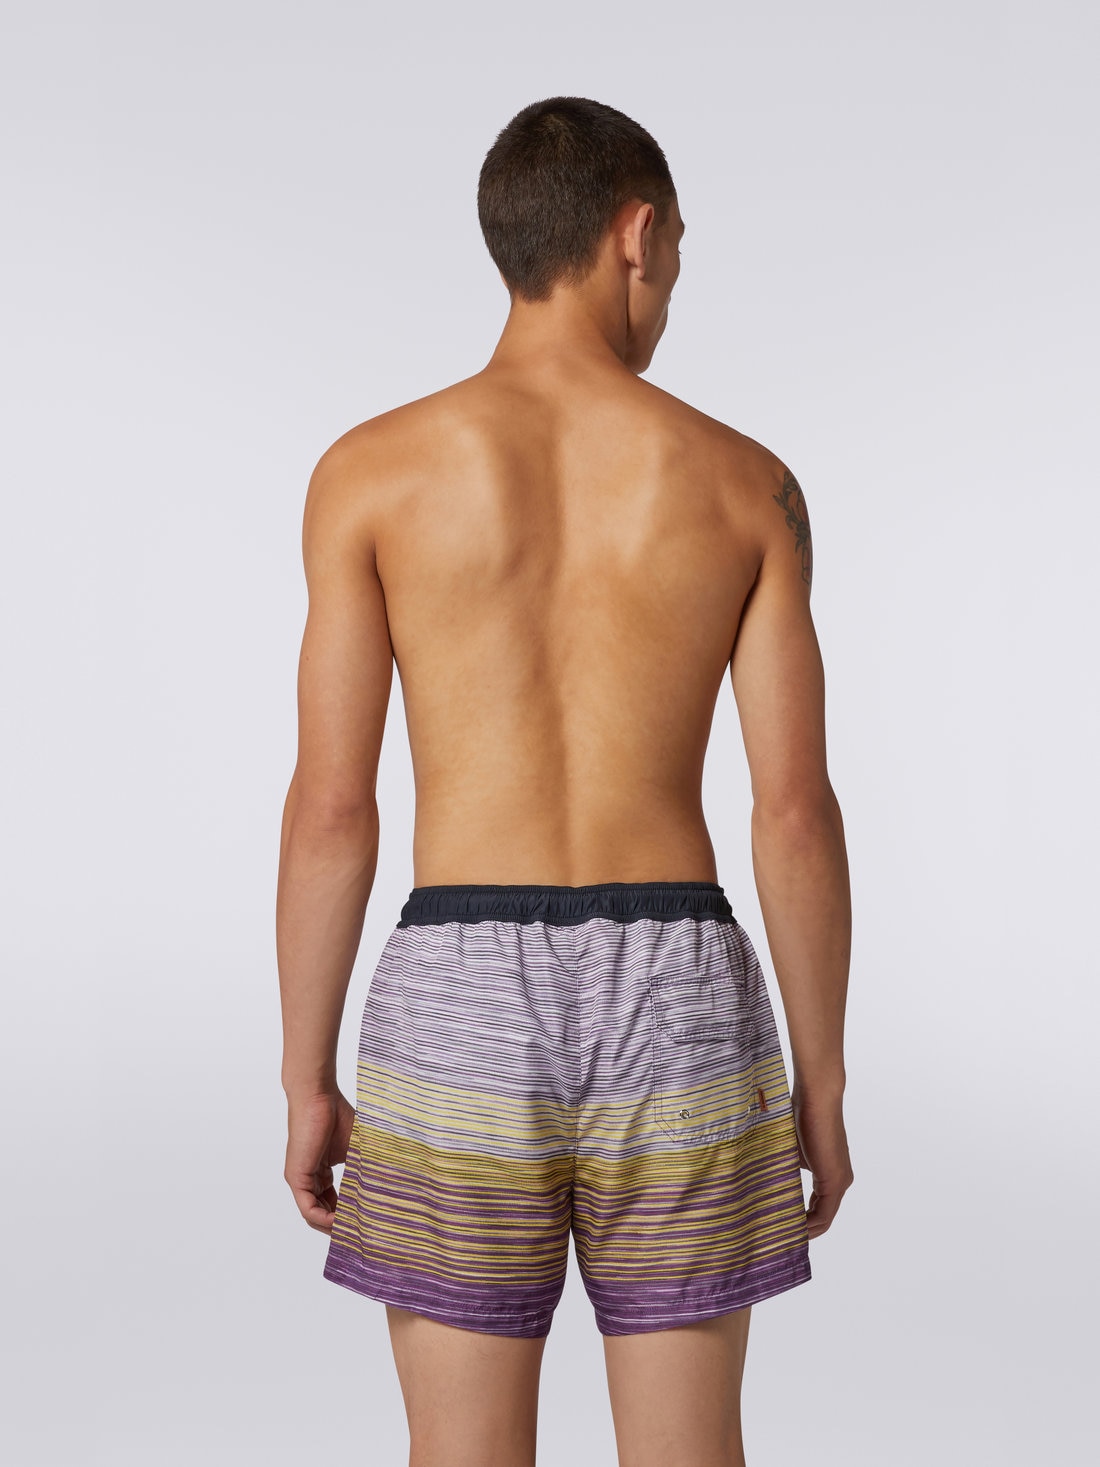 Nylon-blend swimming trunks in slub print, Multicoloured - US23SP04BW00M6F500R - 3